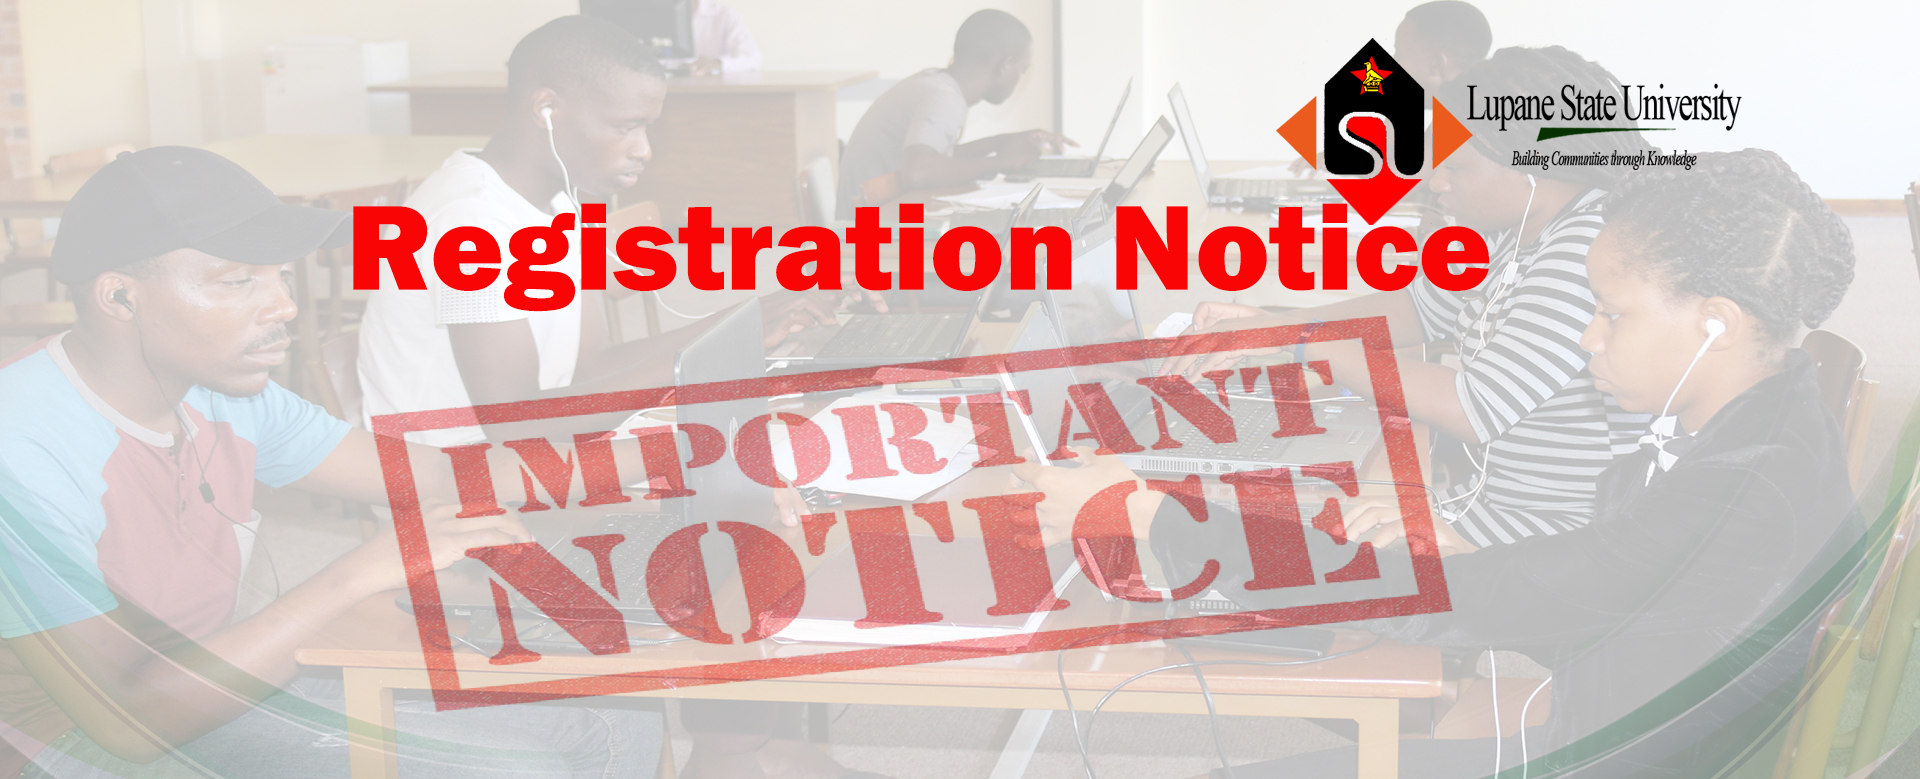 Registration Notice